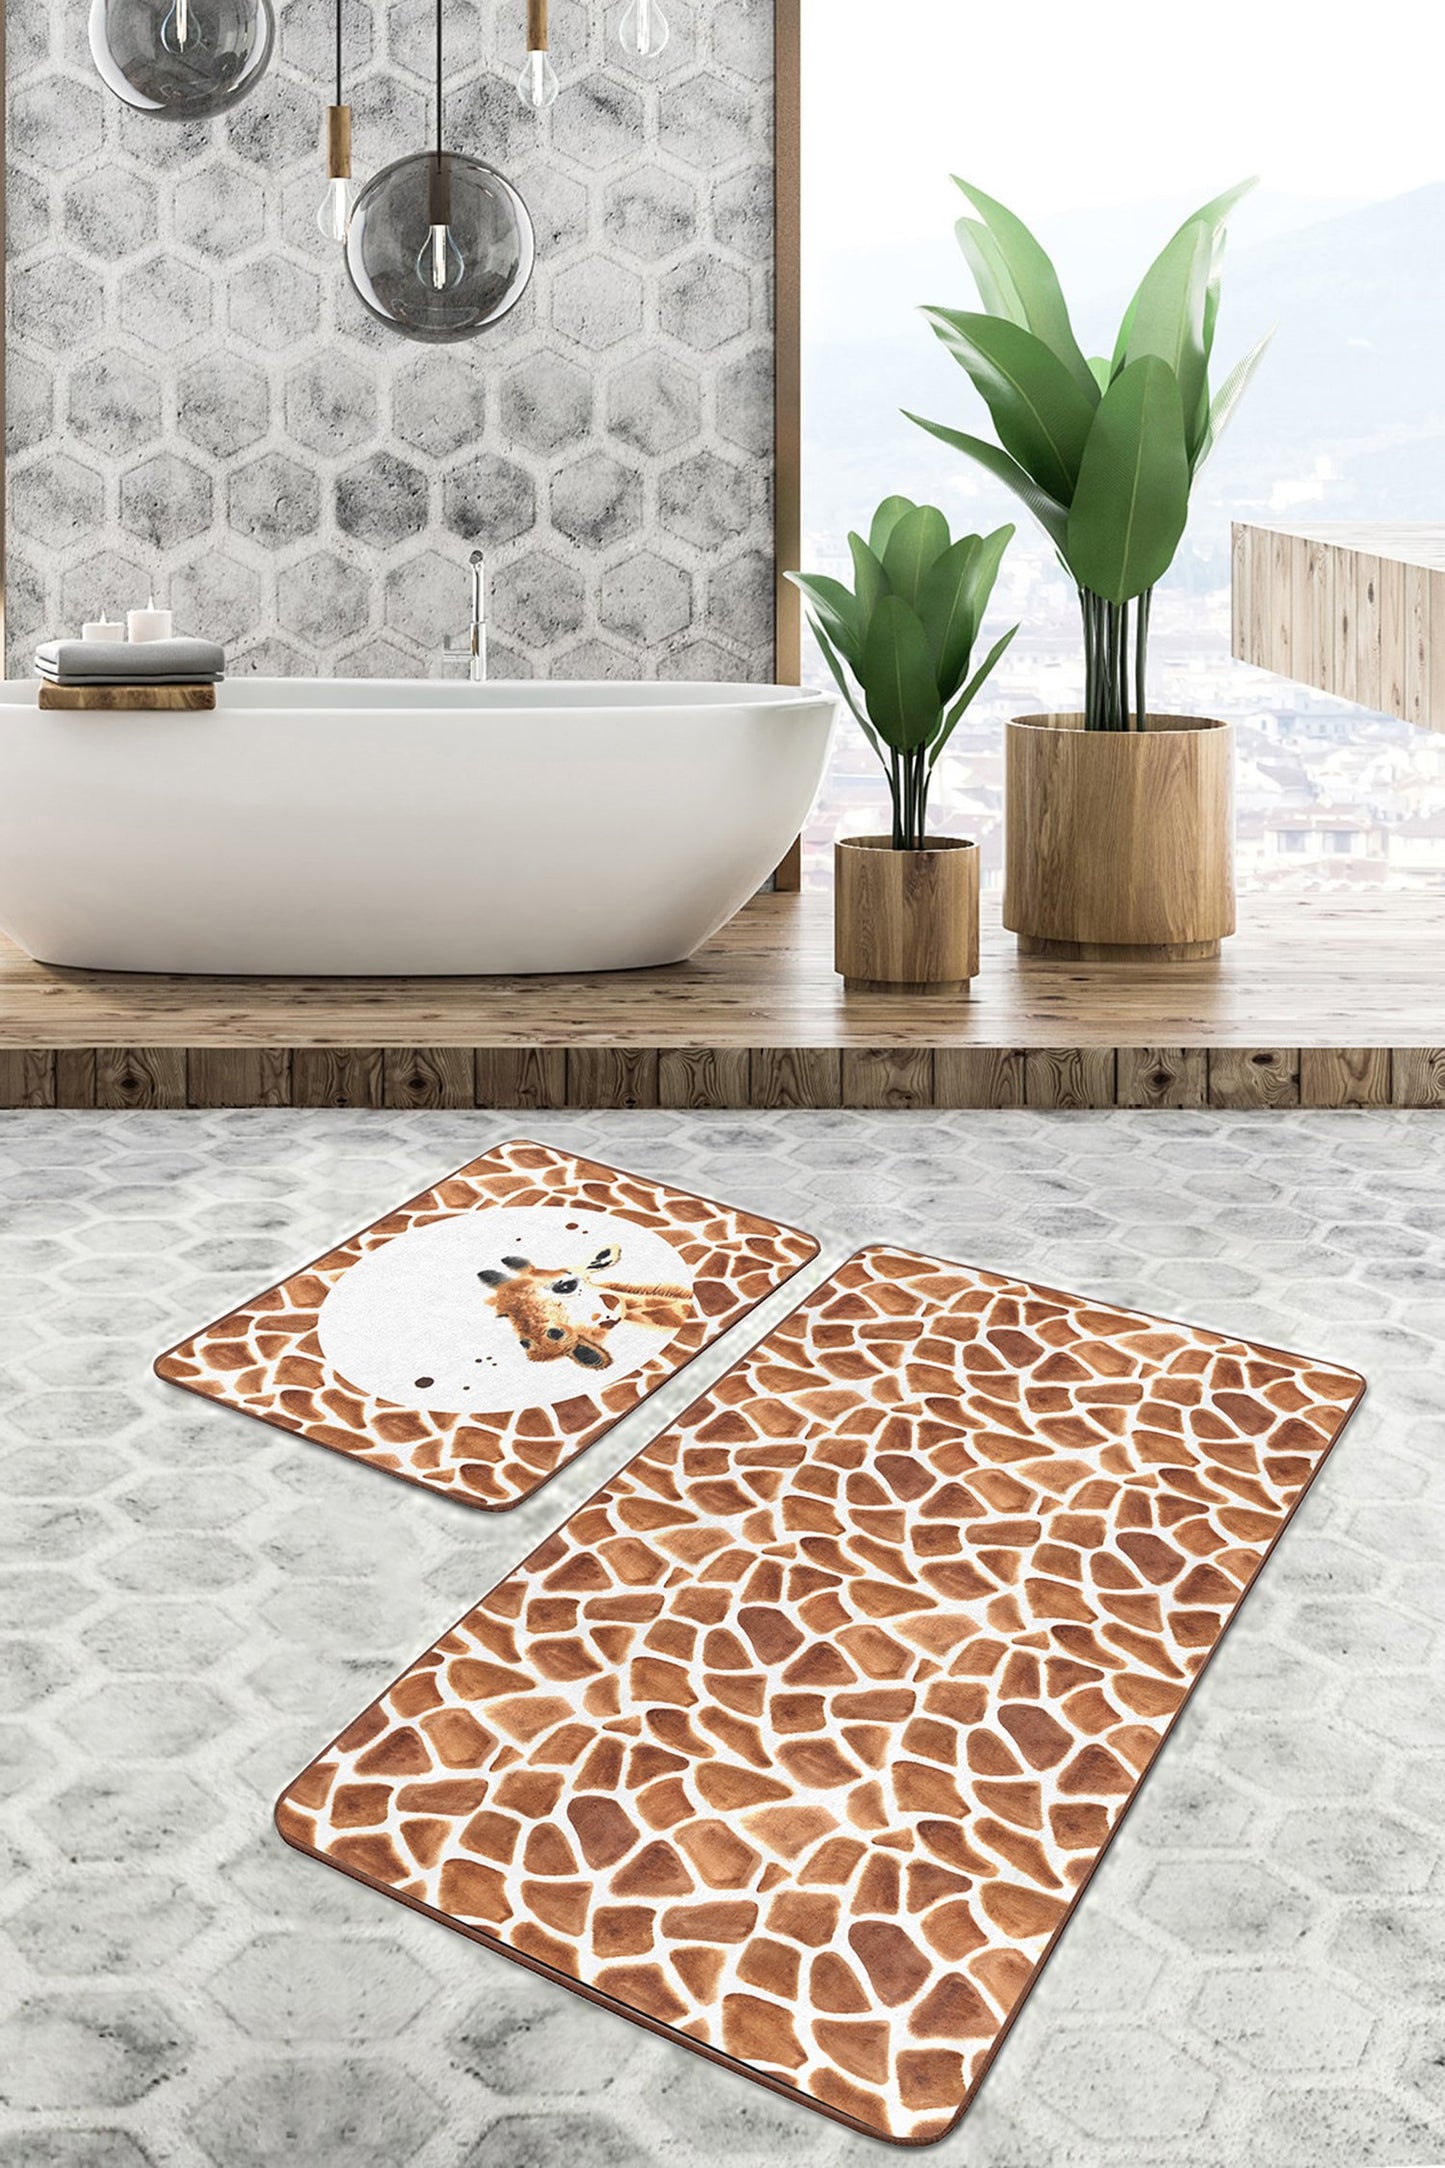 High-Quality Giraffe Pattern Bath Mat Set for Stylish Decor